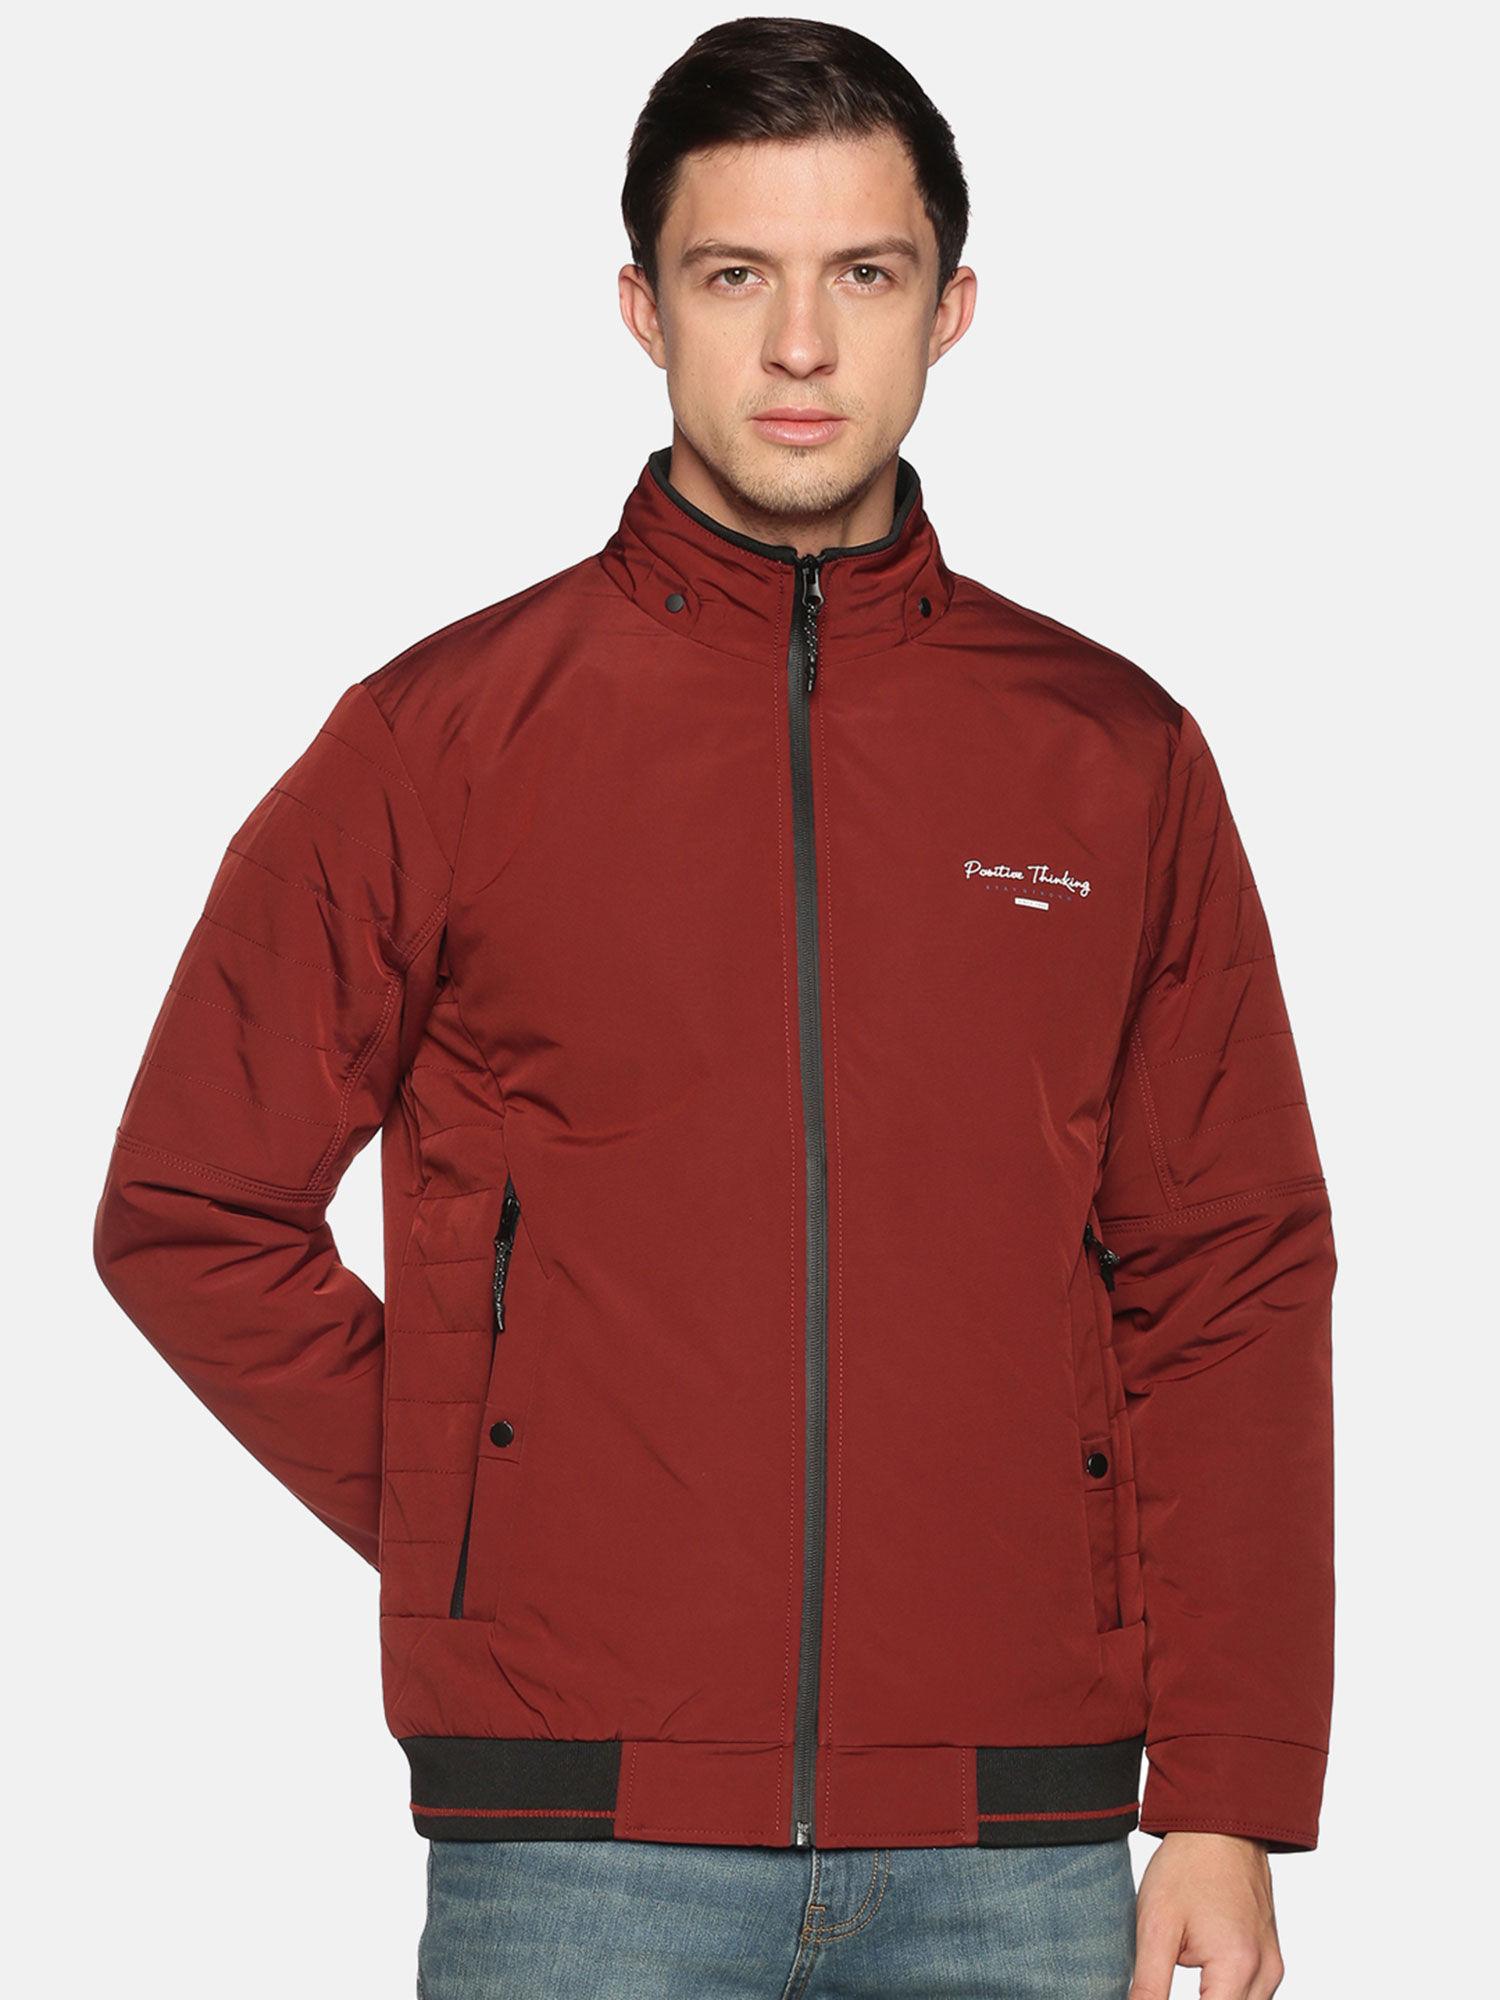 men's-casual-maroon-solid-jacket